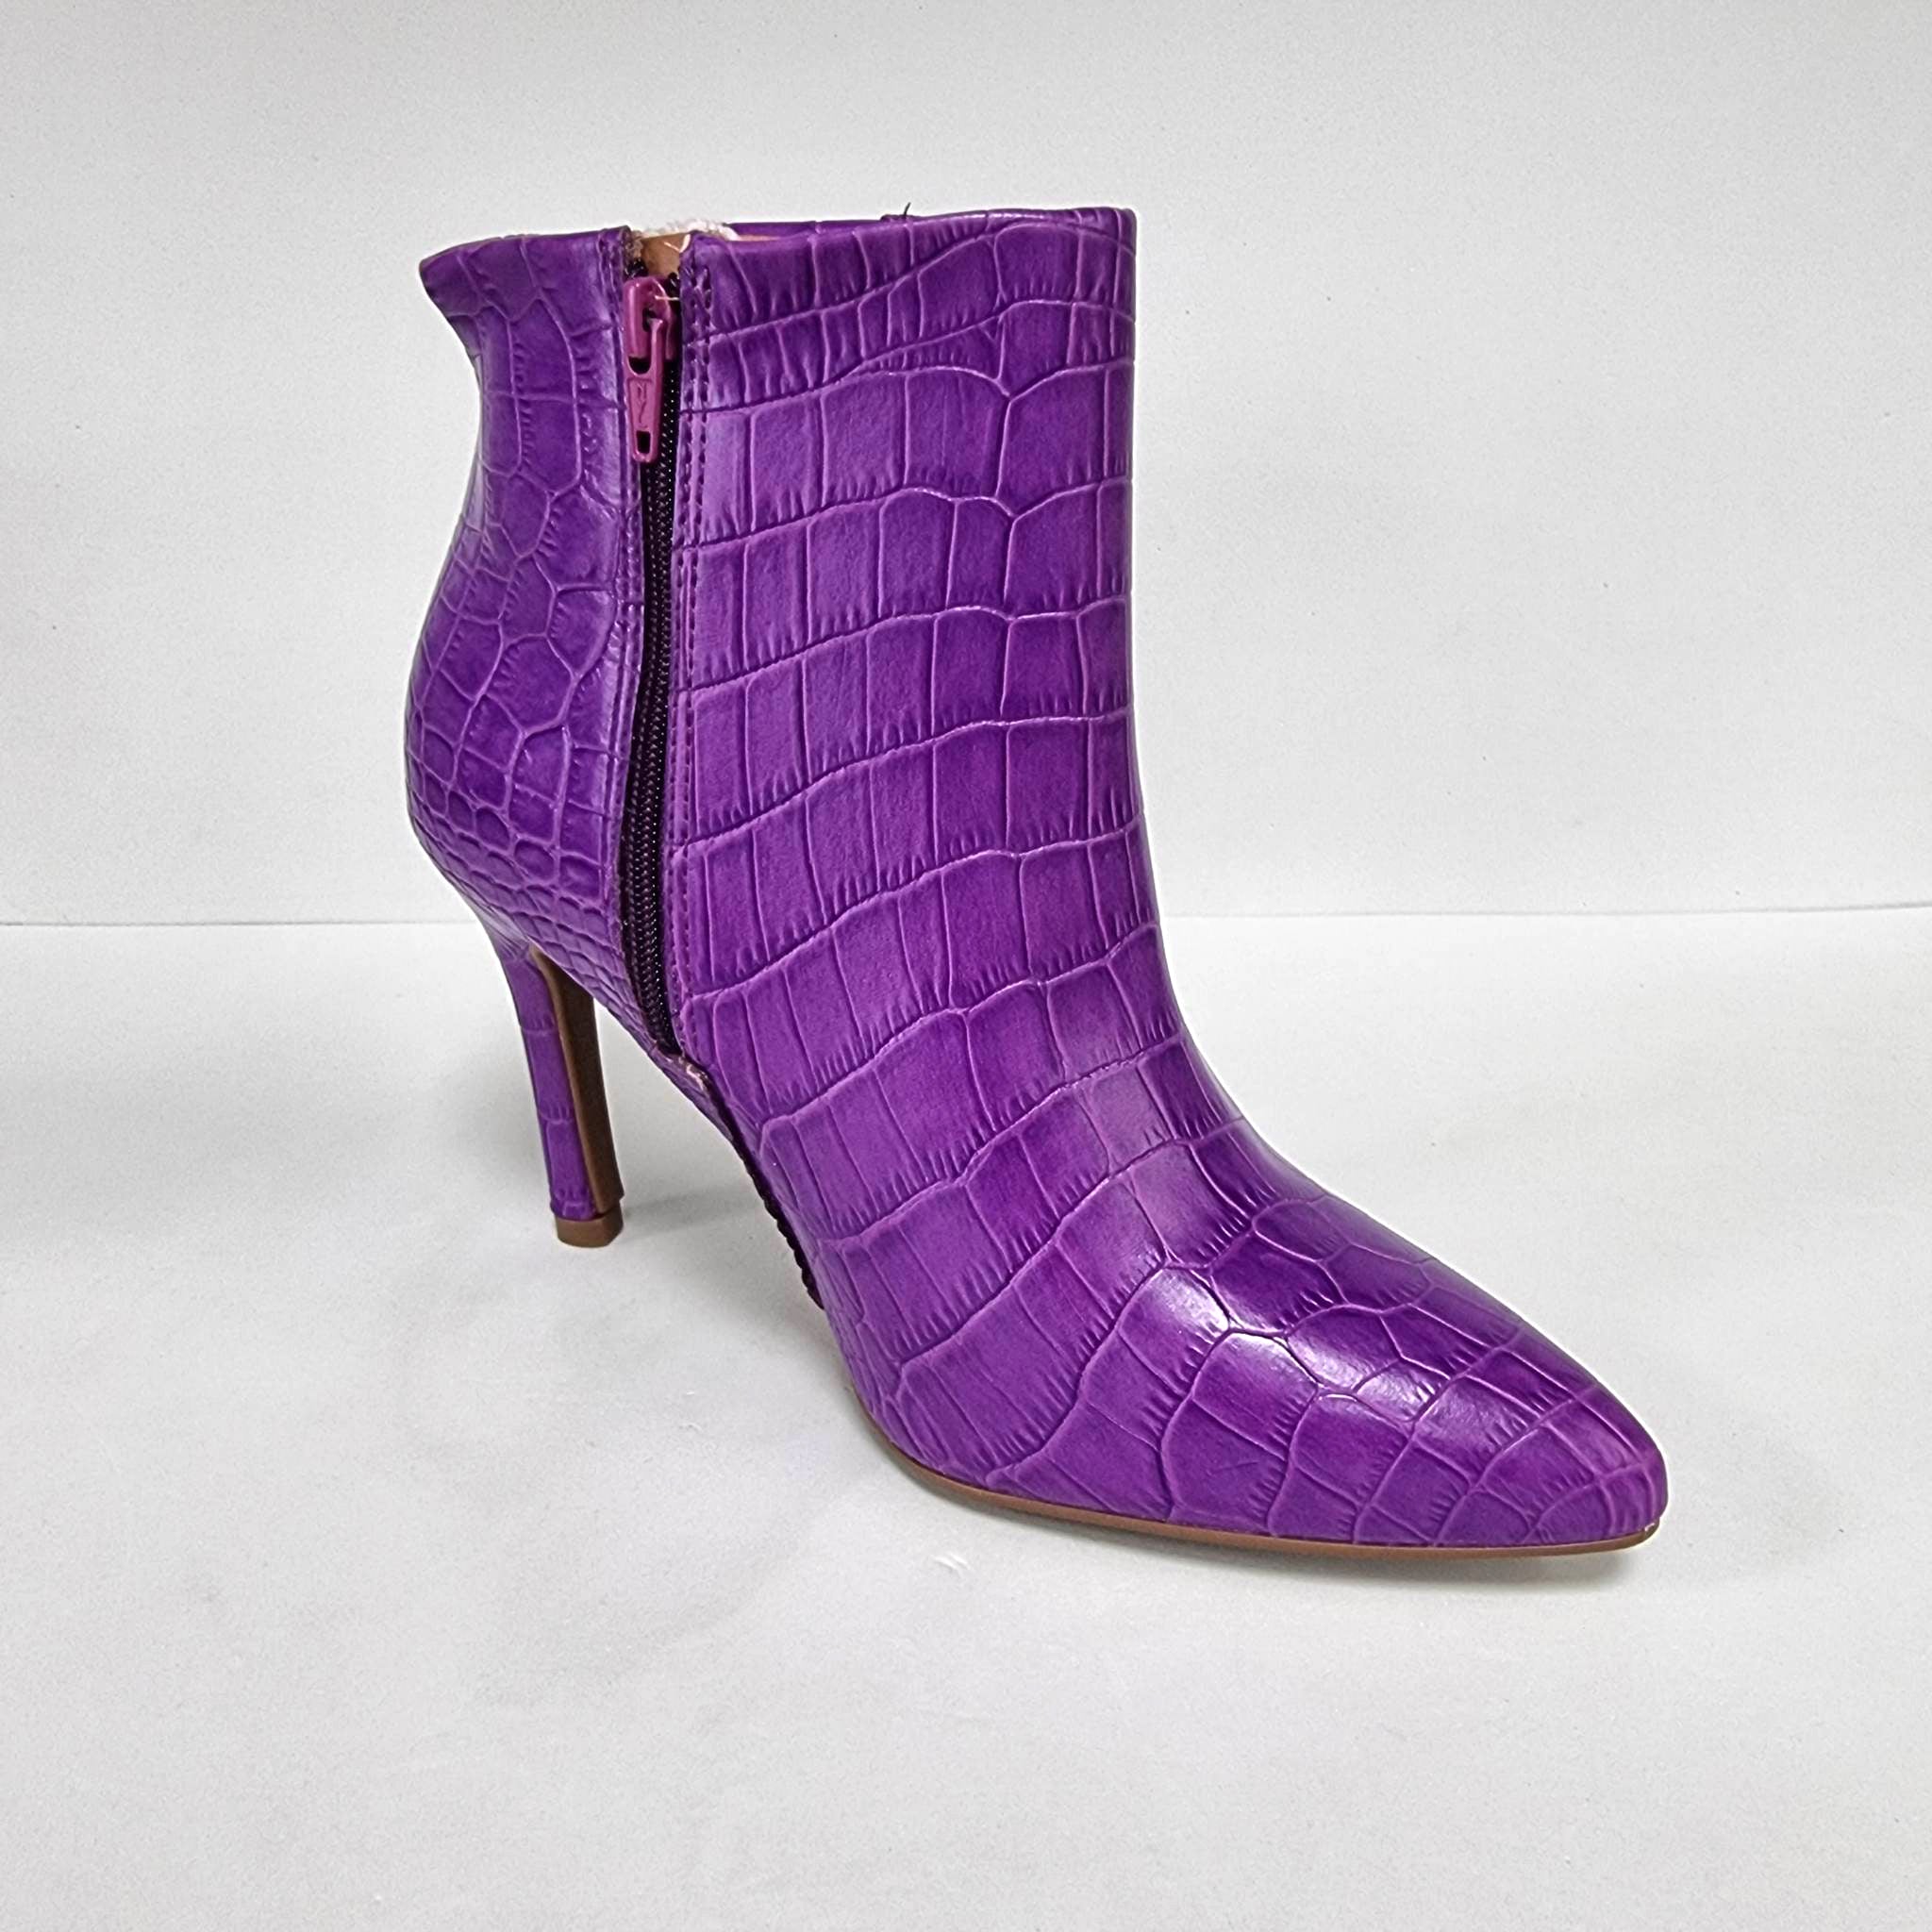 Vizzano 3049-219 Pointy Toe Stiletto Heel Ankle Boot in Light Violet Croc